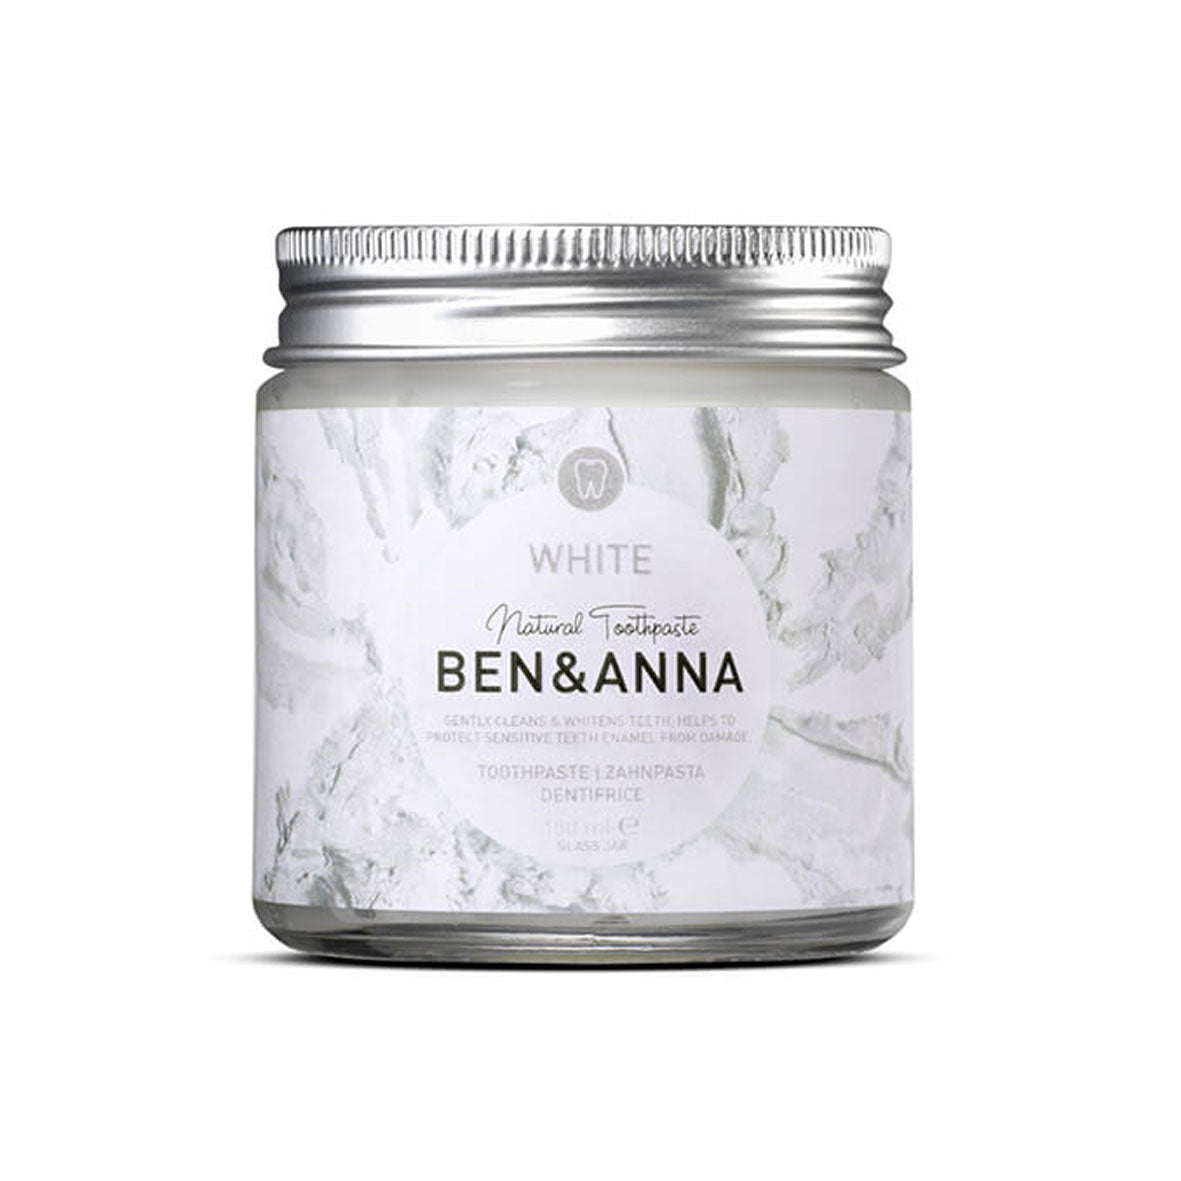 Ben&amp;Anna Natural Toothpaste in Glass Jar Whitening 